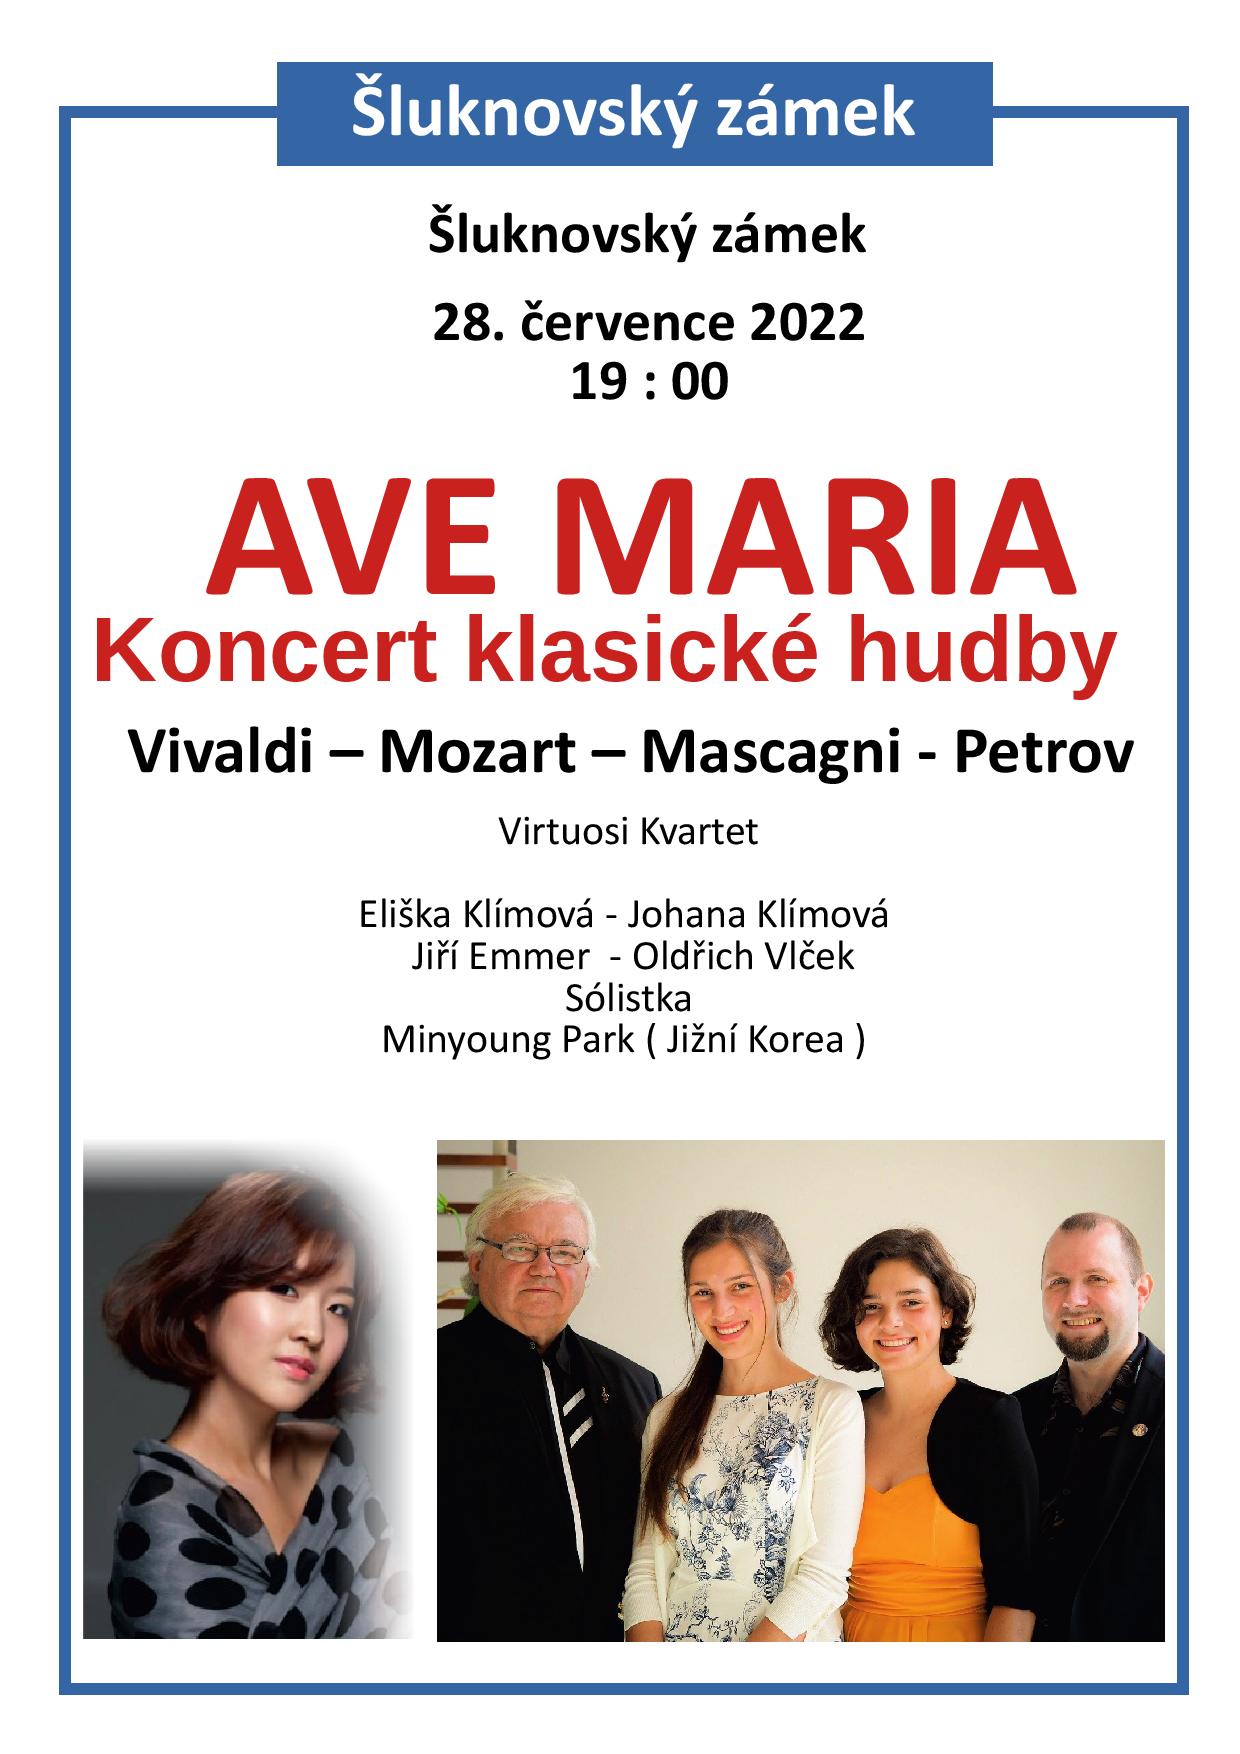 Koncert klasické hudby AVE MARIA